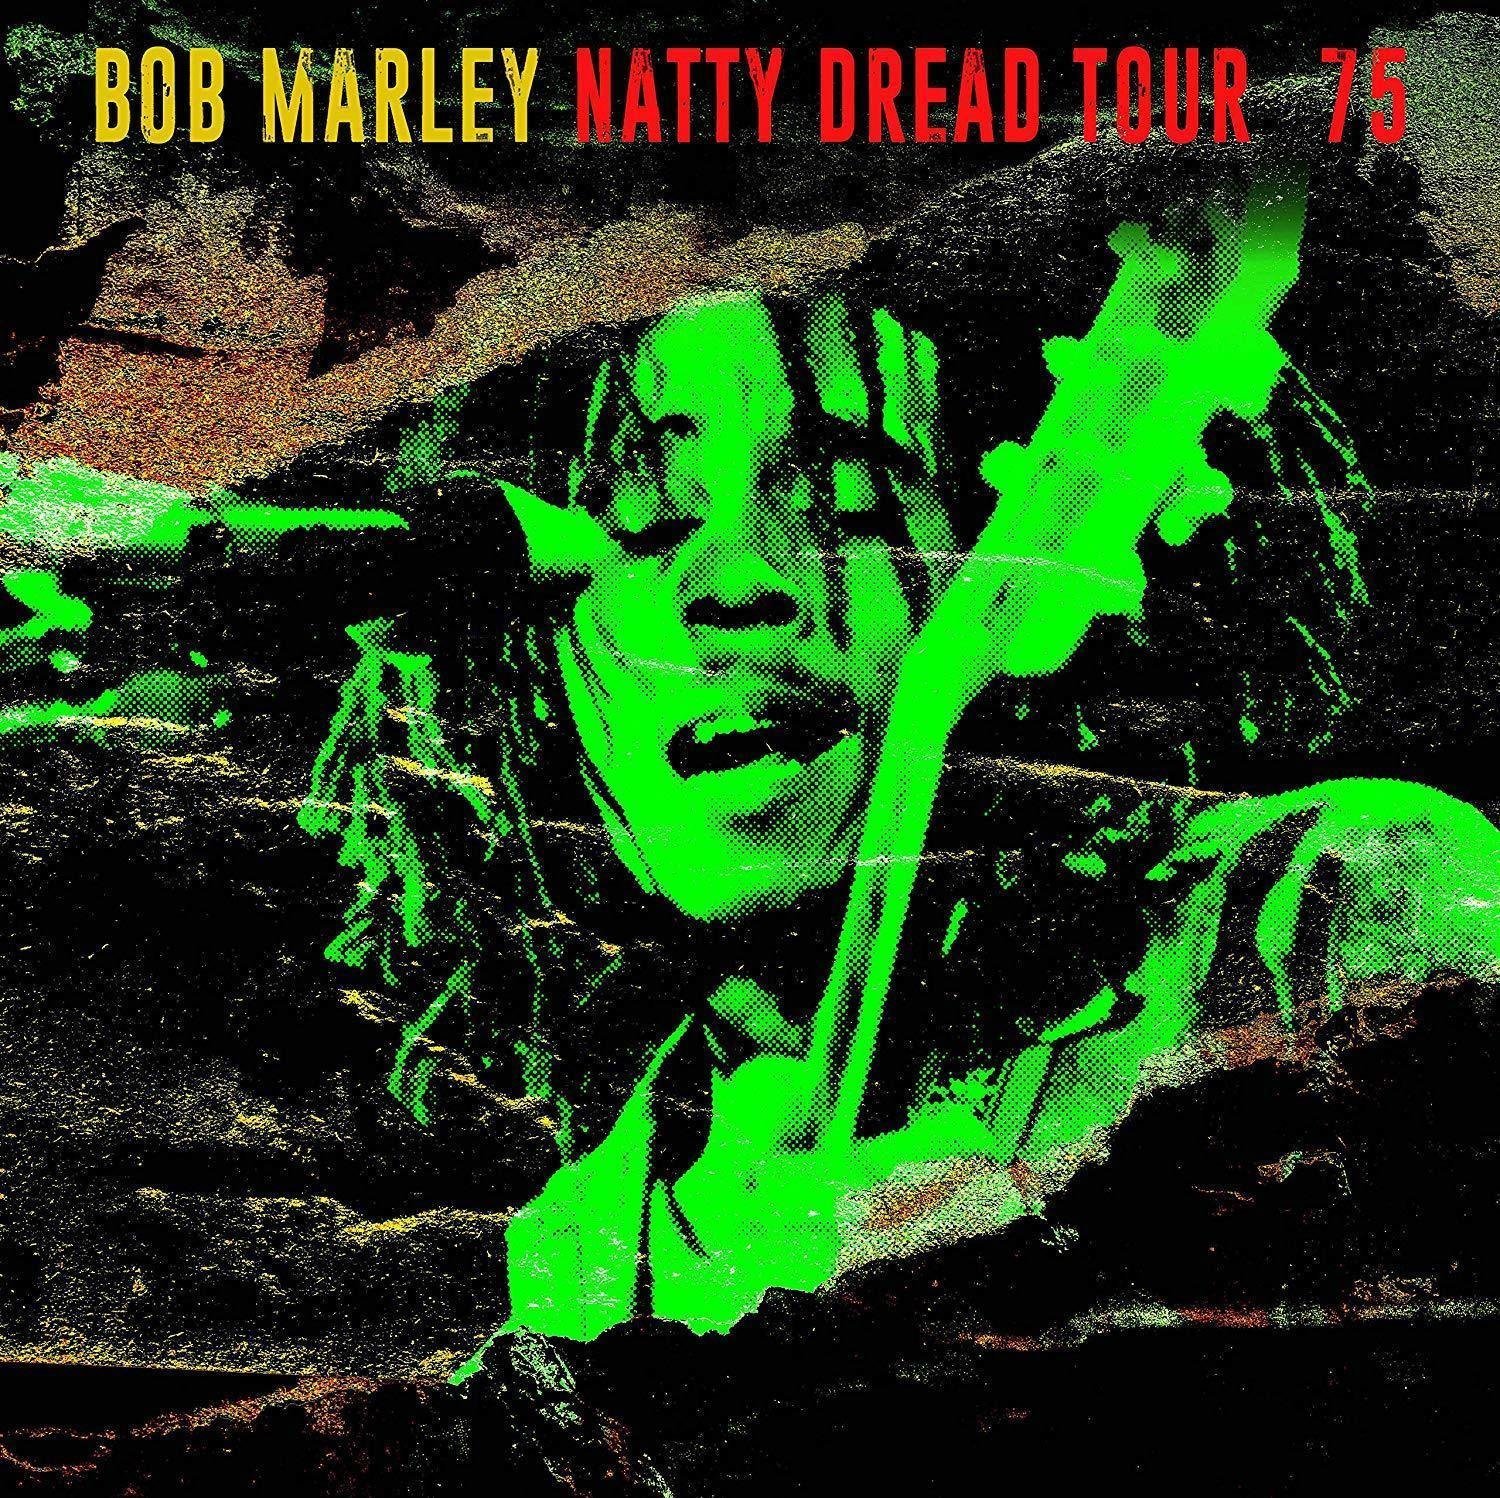 Vinyl Record Bob Marley - Natty Dread Tour '75 (LP)